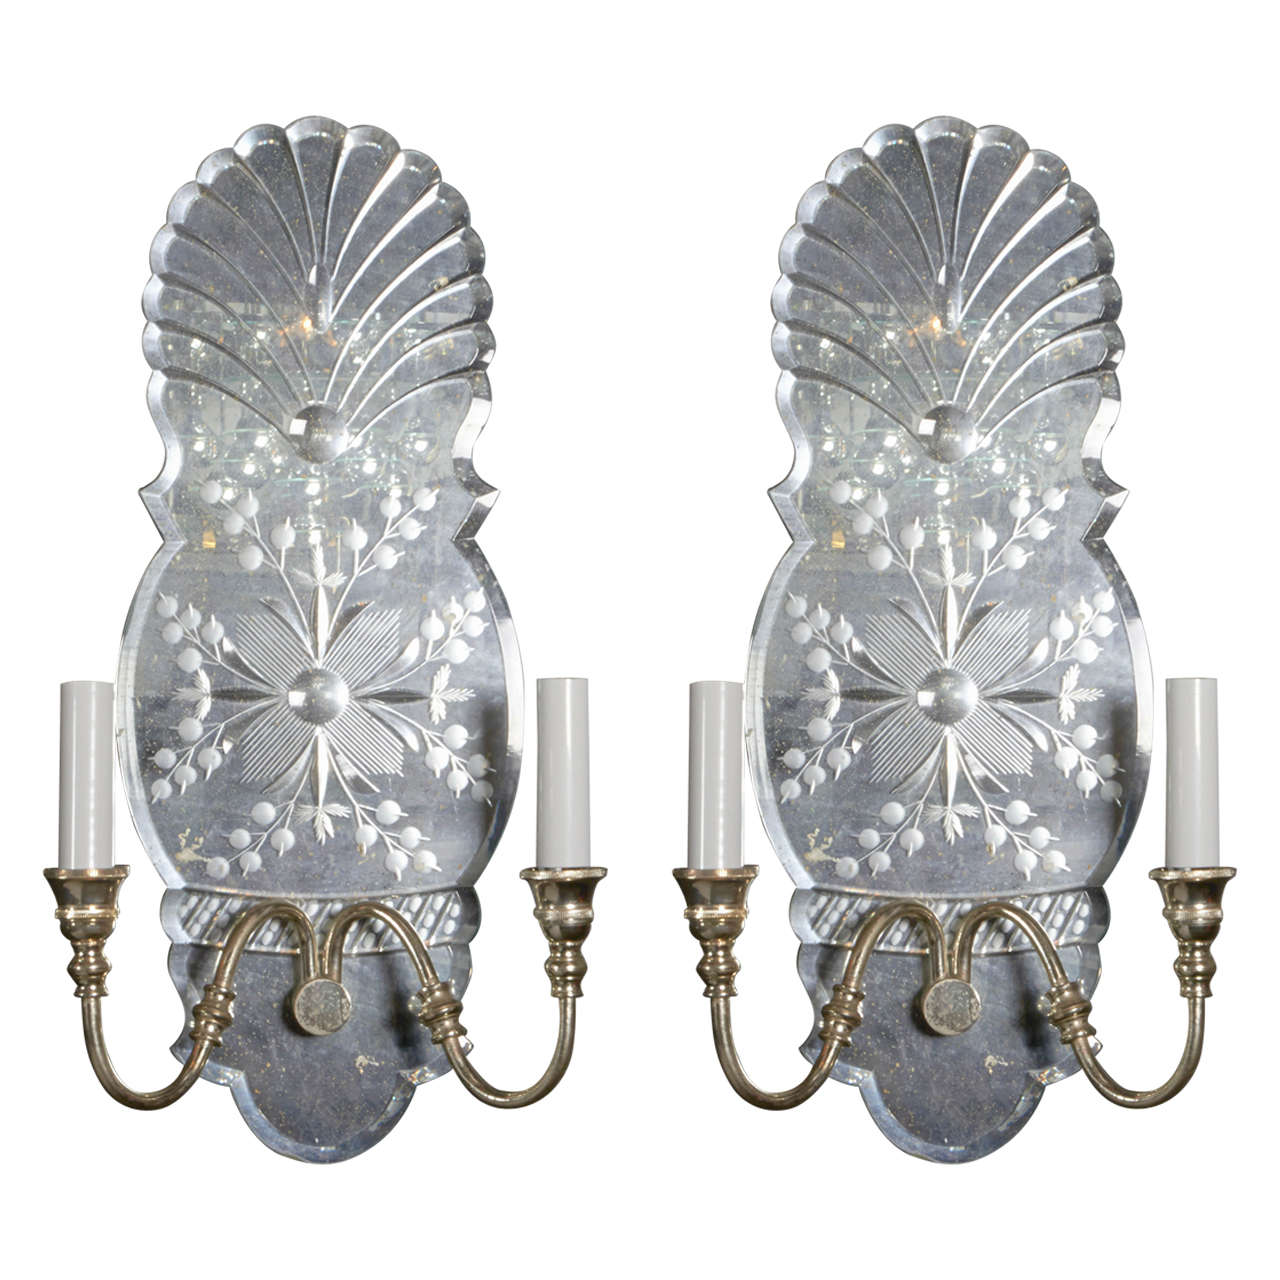 Pair of 1940s Venetian Mirrored Sconces